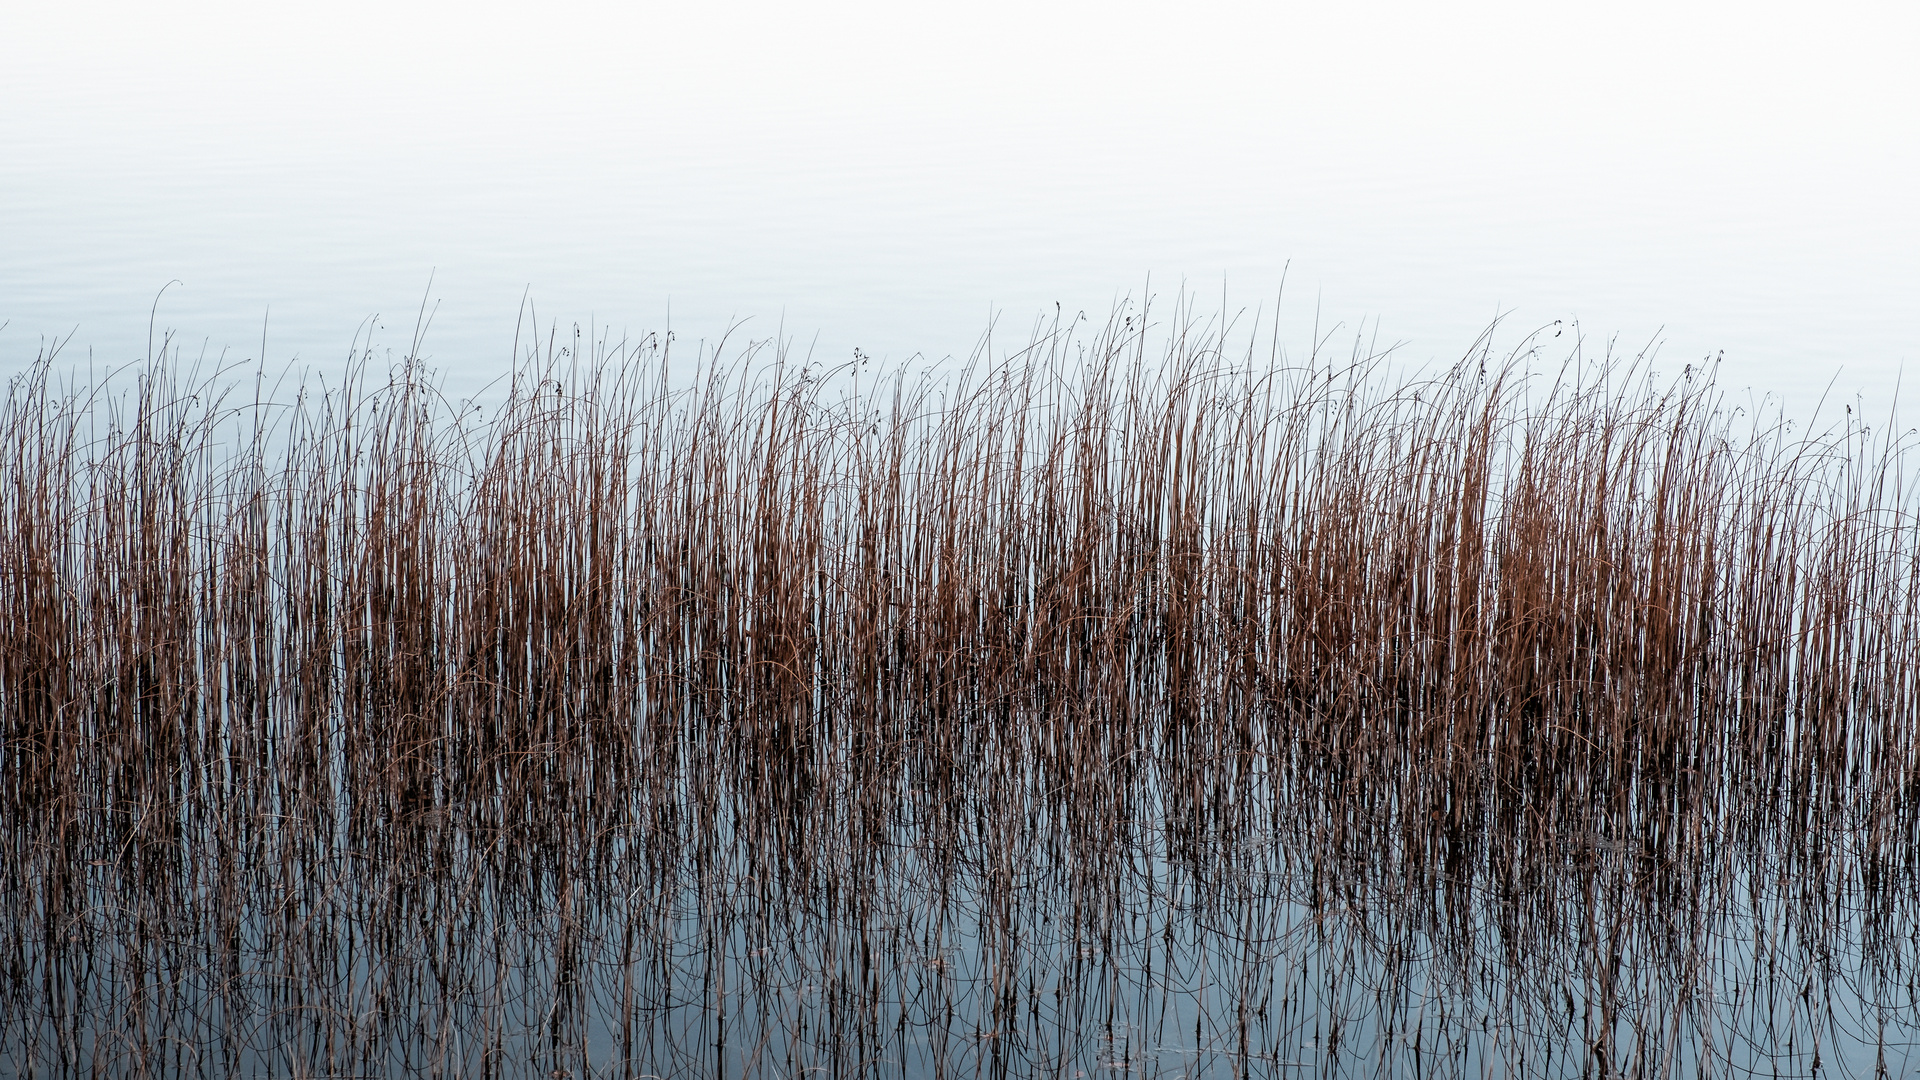 Grasses in the lake 1